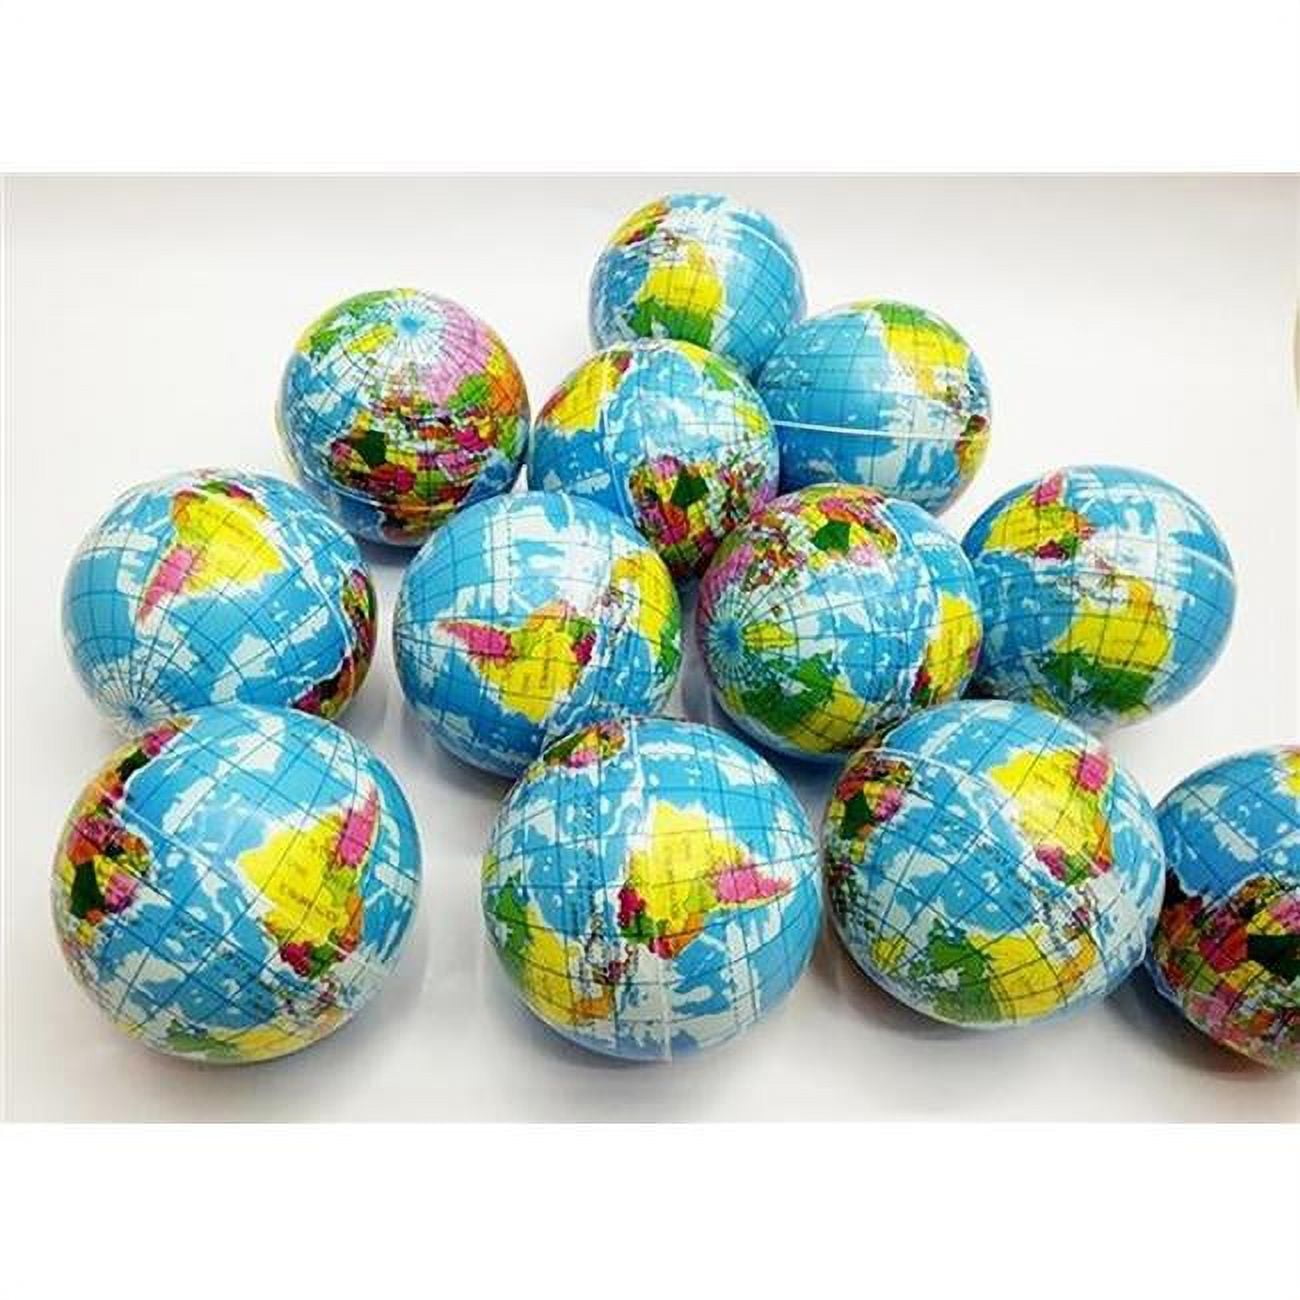 Psbp24 Mini Planet Earth Soft Foam Stress Balls - 24 Balls Per Box